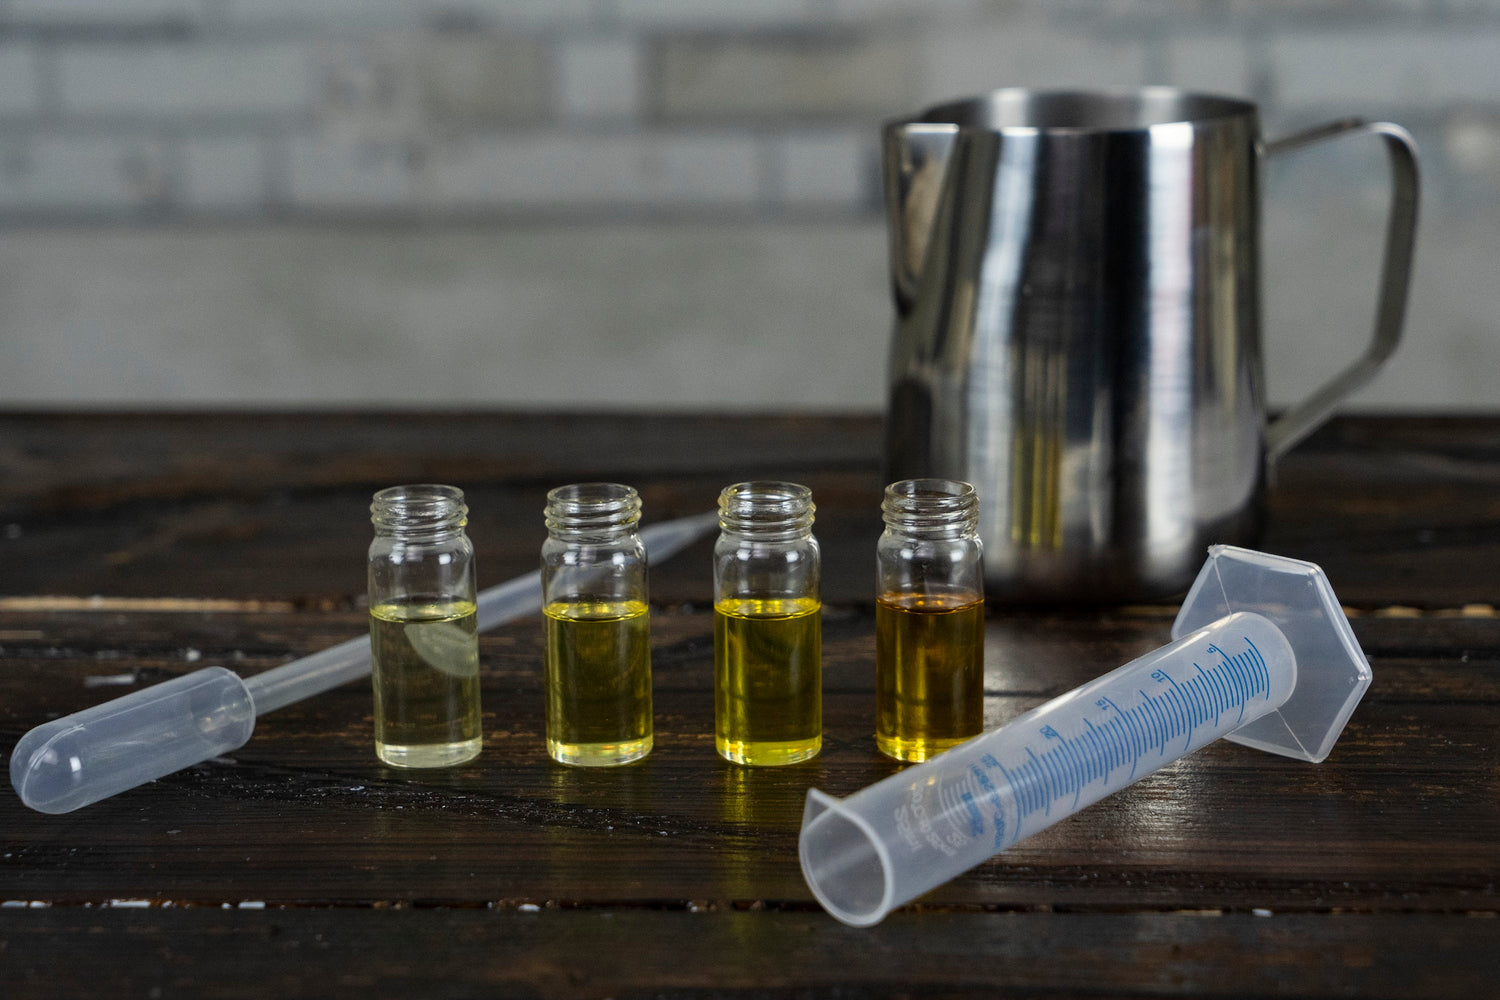 Sample fragrance oils, measuring equipment, pipette, measuring jug